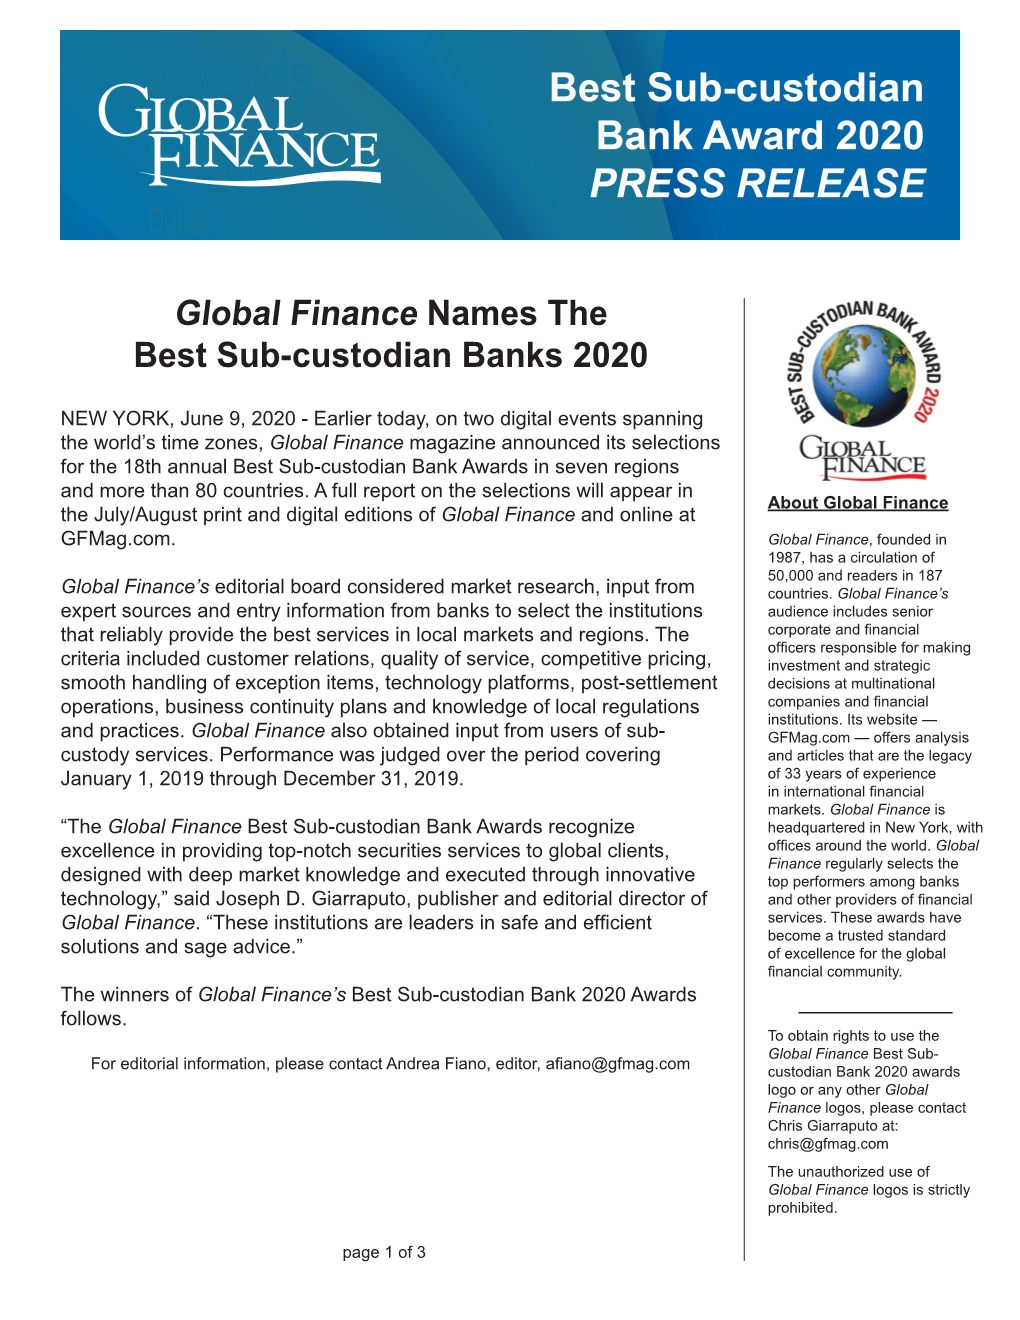 Global Finance Names the Best Sub-Custodian Banks 2020